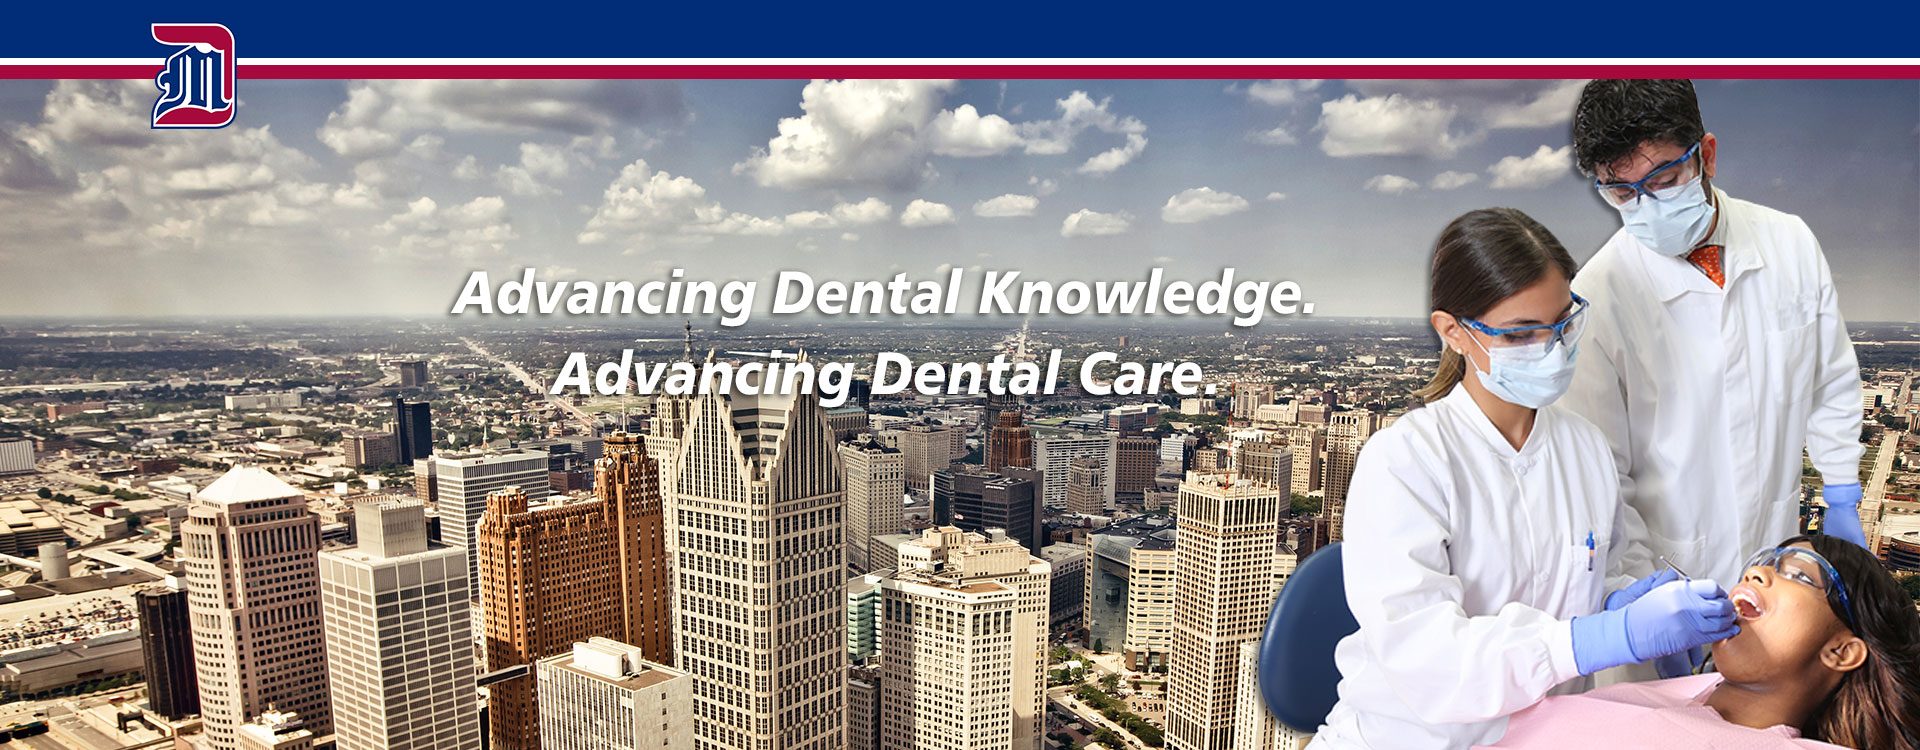 Advancing Dental Knowledge. Advancing Dental Care.